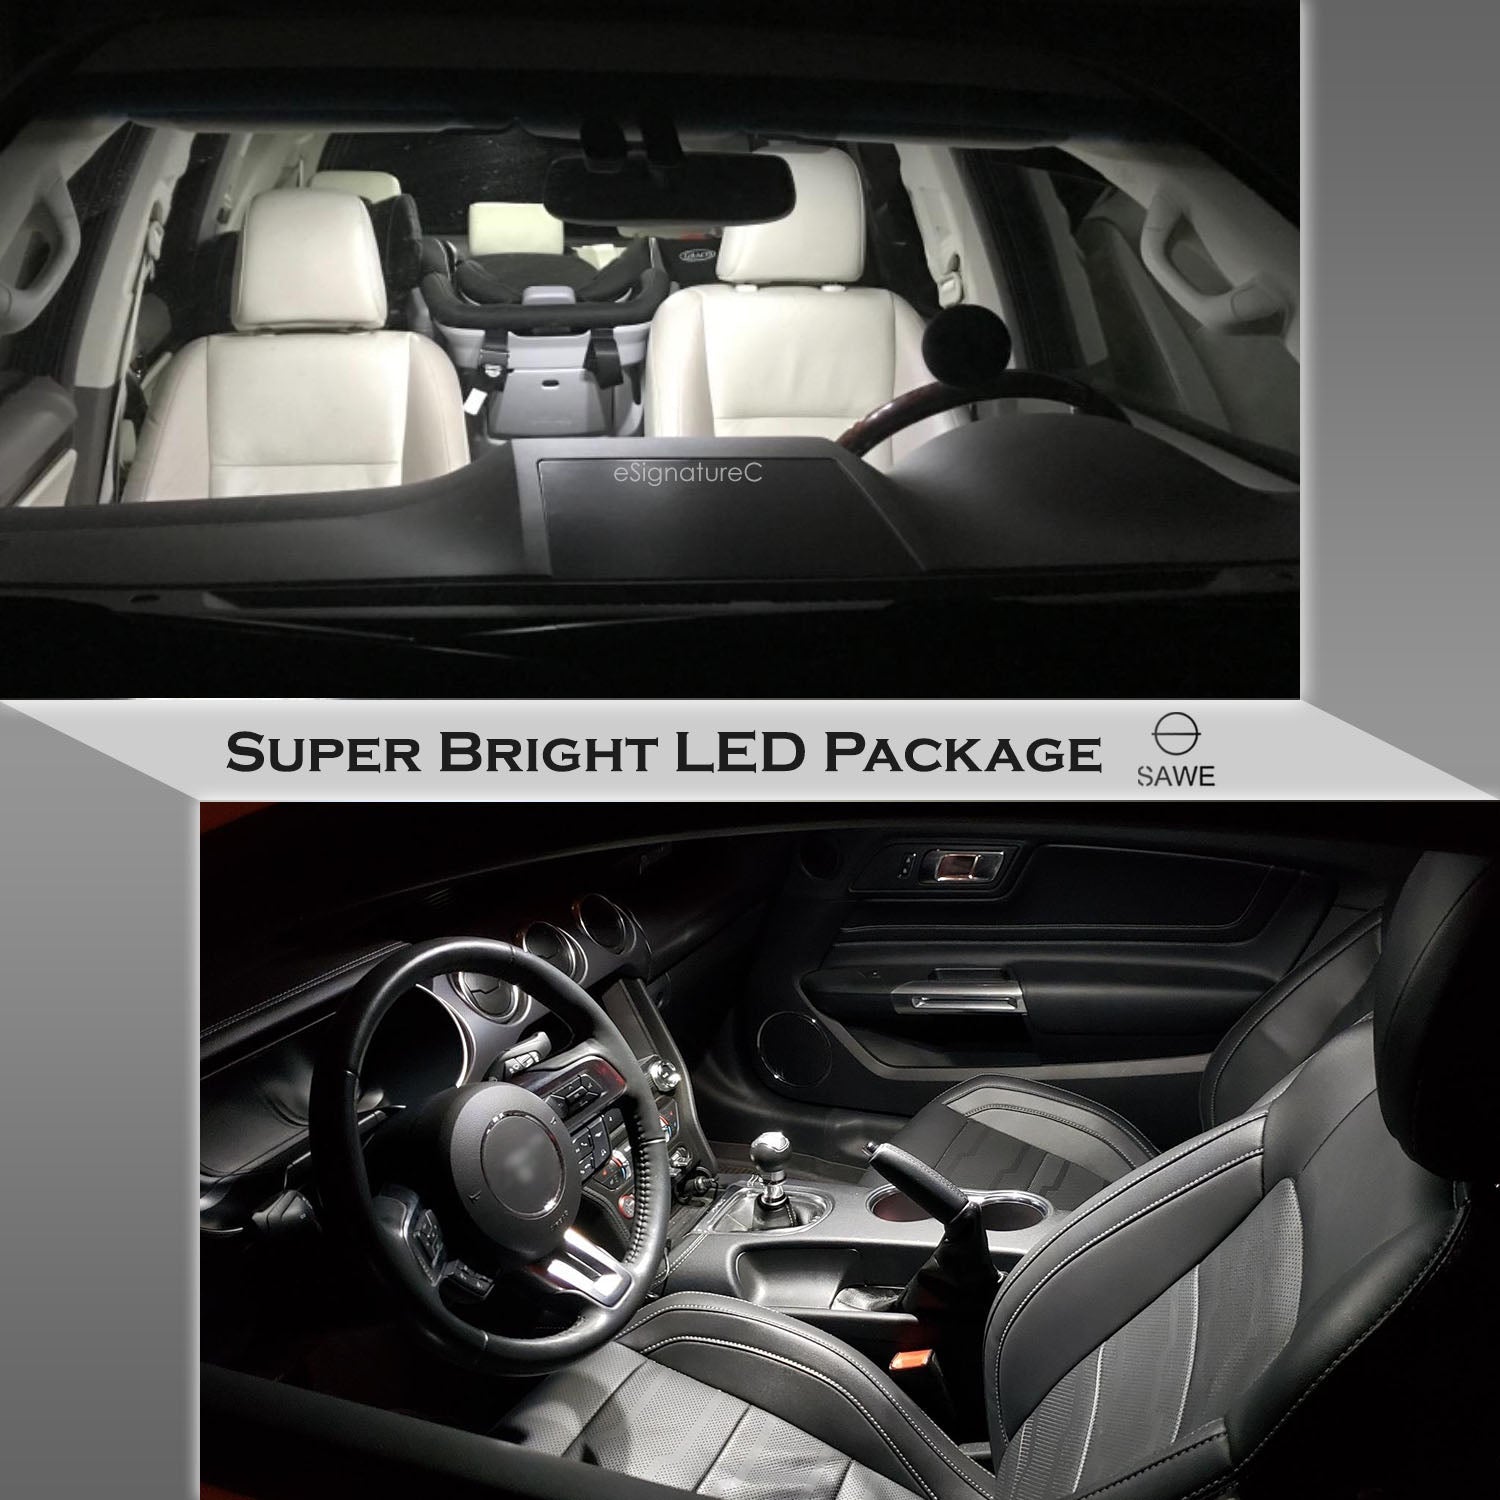 For Audi Allroad Interior LED Lights - Dome & Map Light Bulb Package Kit for 2001 - 2005 - White